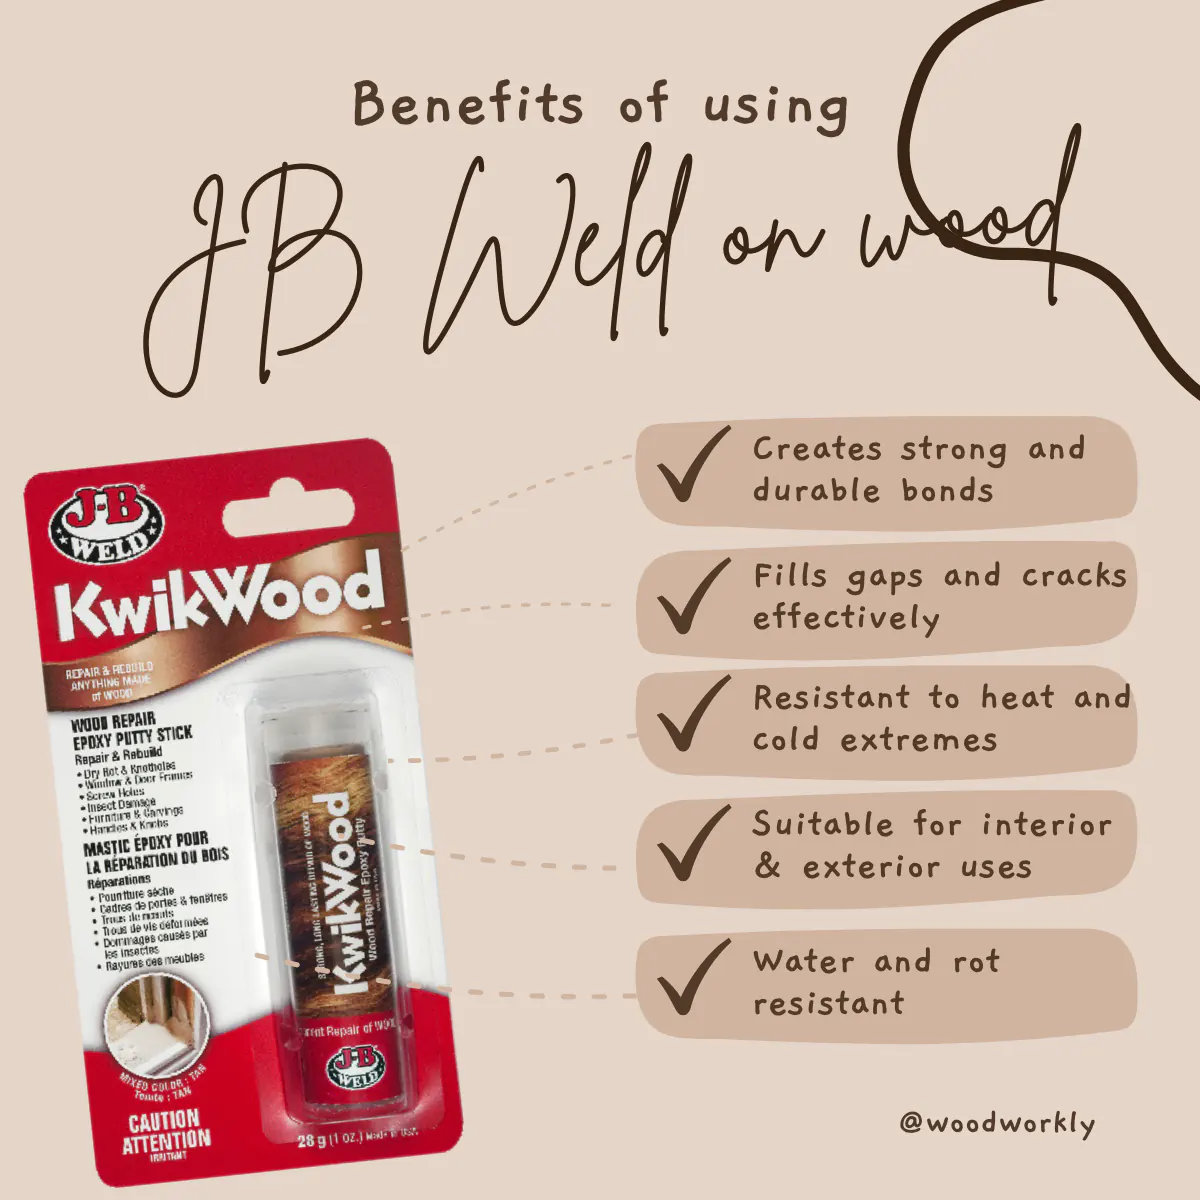 Benefits of using JB weld on wood